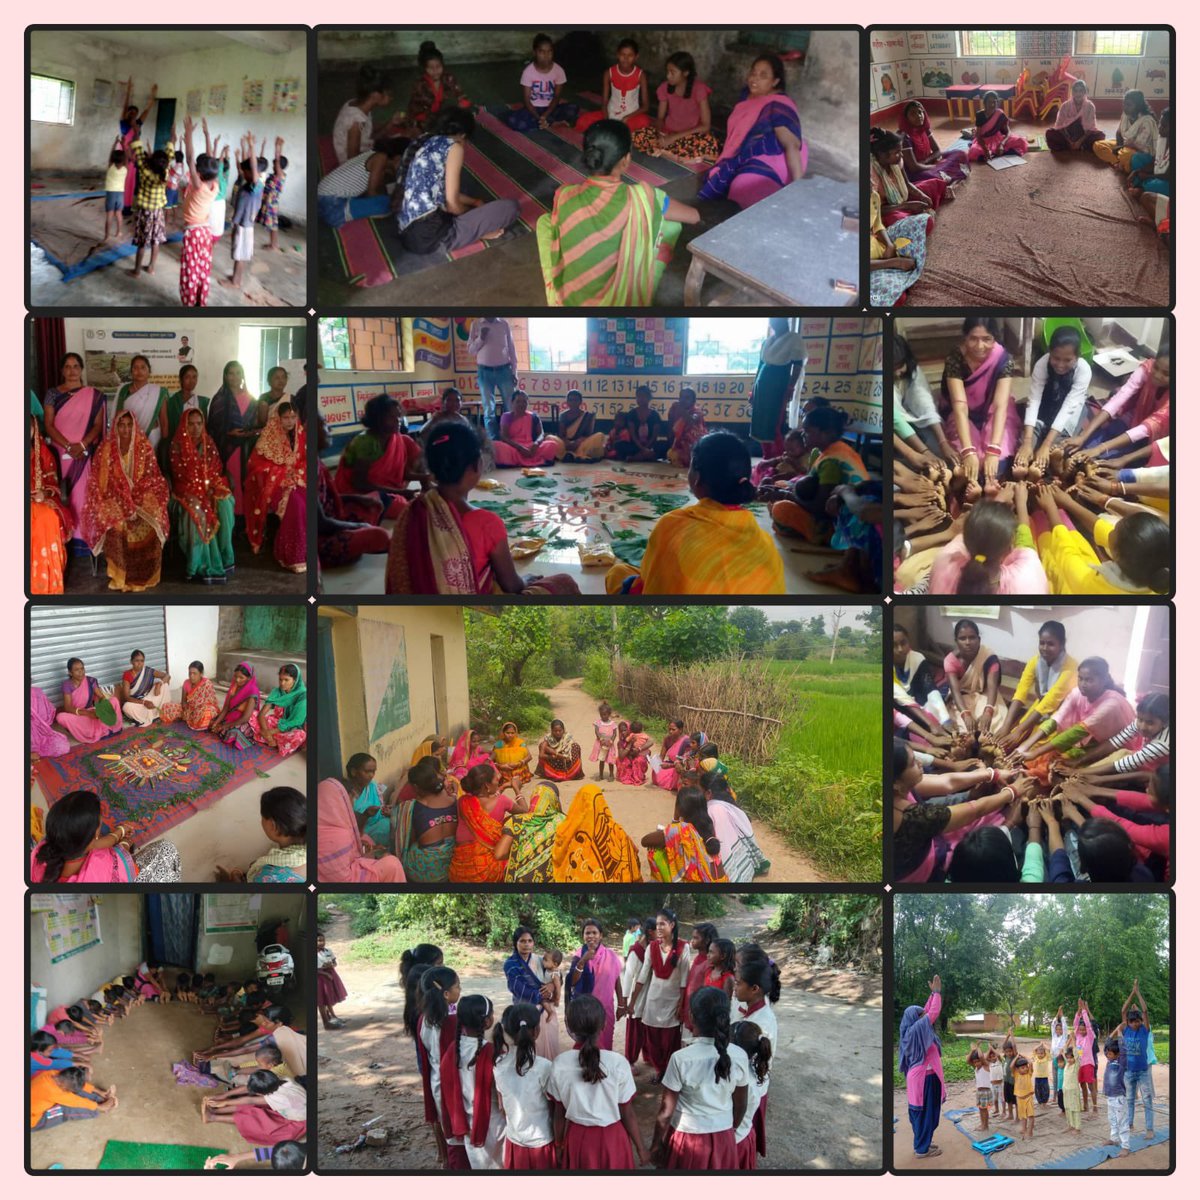 Glimpses of activities @POSHAN_Official on 21st Sept’22 #Yoga, #MHM training of adolescent girls #SloganWriting, #THR distribution & #sustainable planning.

#SahiPoshanDeshRoshan 

@JharkhandCMO 
@MinistryWCD 
@DC_Ranchi 
@DDC_Ranchi 
@prdjharkhand